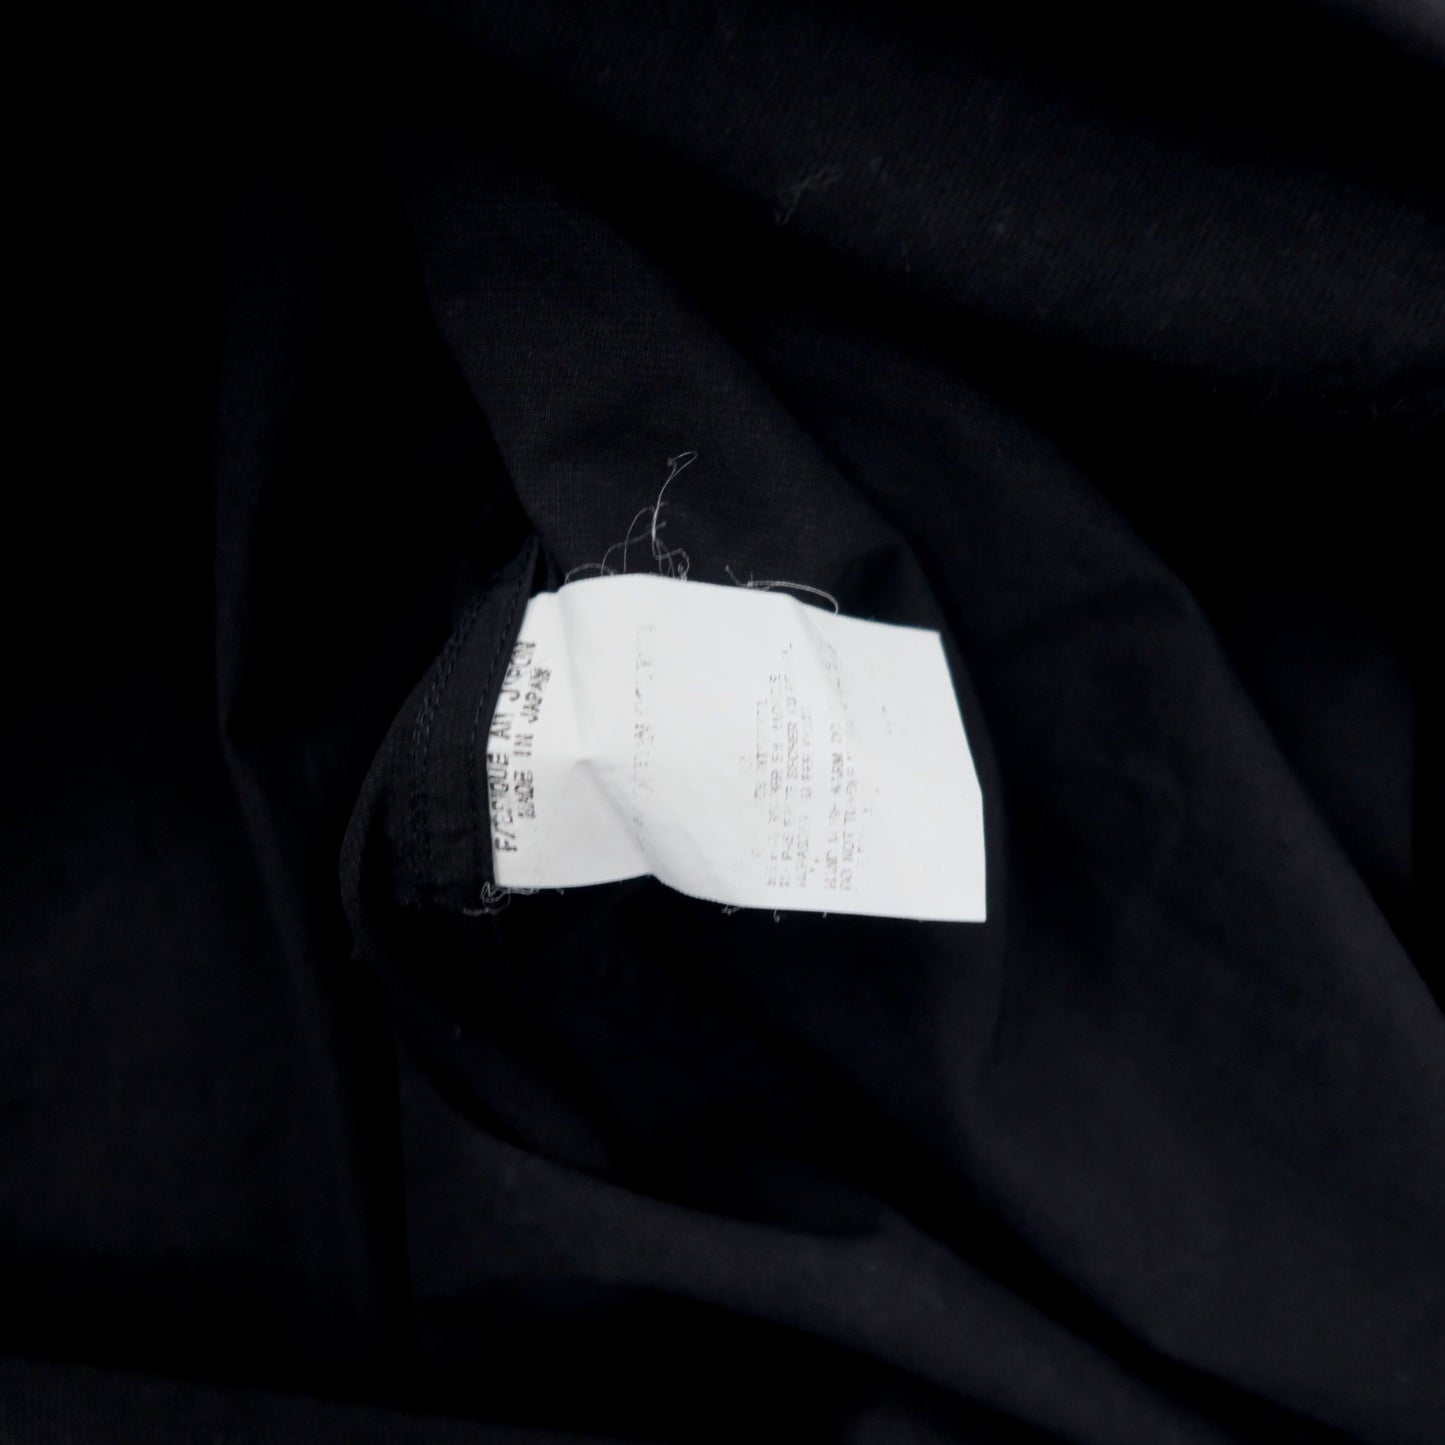 Yohji Yamamoto COSTUME D' HOMME 半袖 ボタンダウンシャツ 3 ブラック コットン 日本製